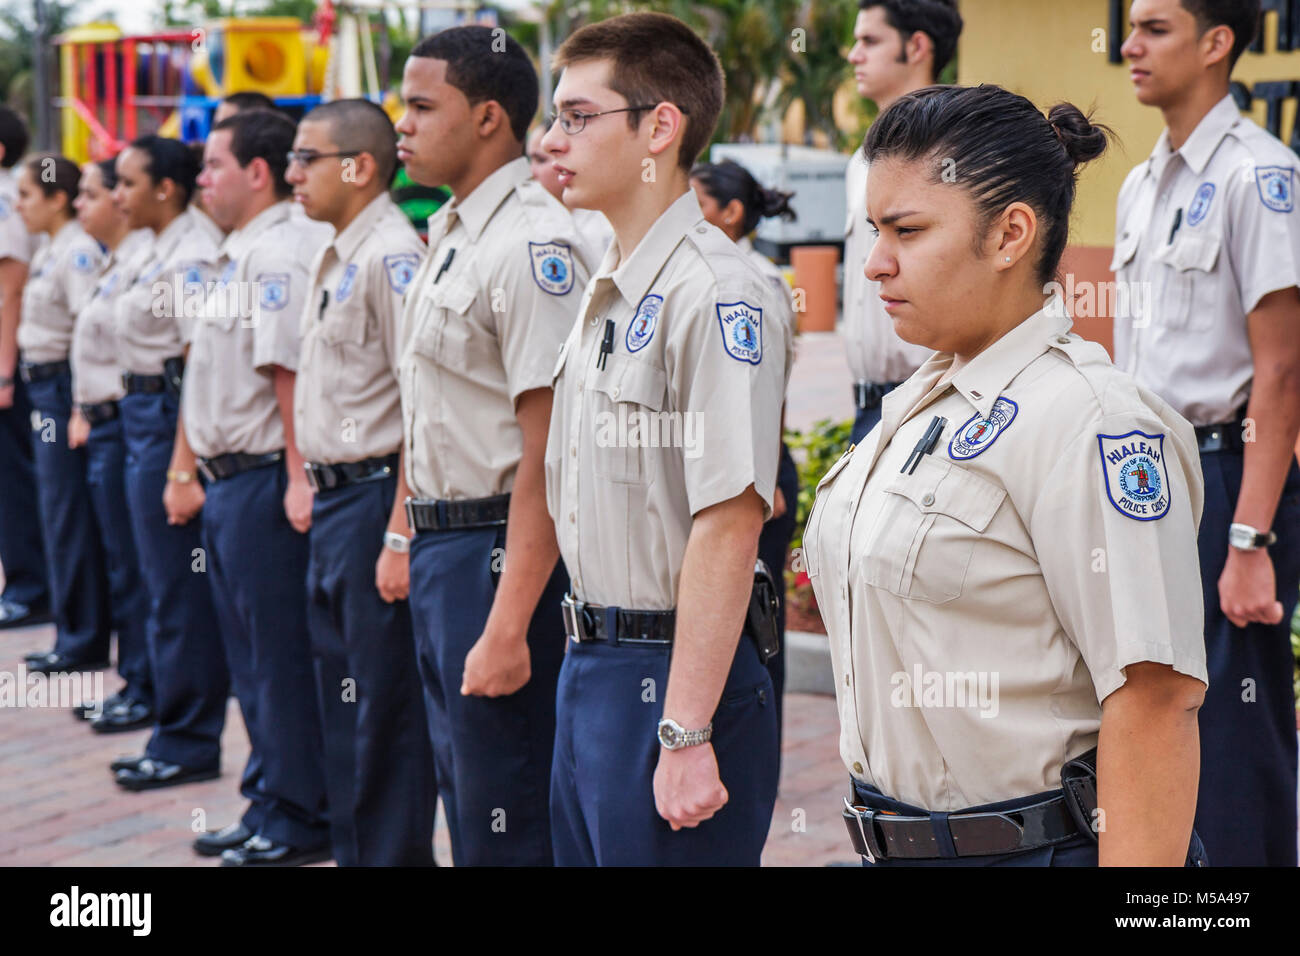 Miami Florida, Hialeah, Milander Park Hispanic Polizei Kadetten, Jungen Mädchen Teenager Teenager Teenager Teenager Uniformen Disziplin Stehen Aufmerksamkeit Stockfoto